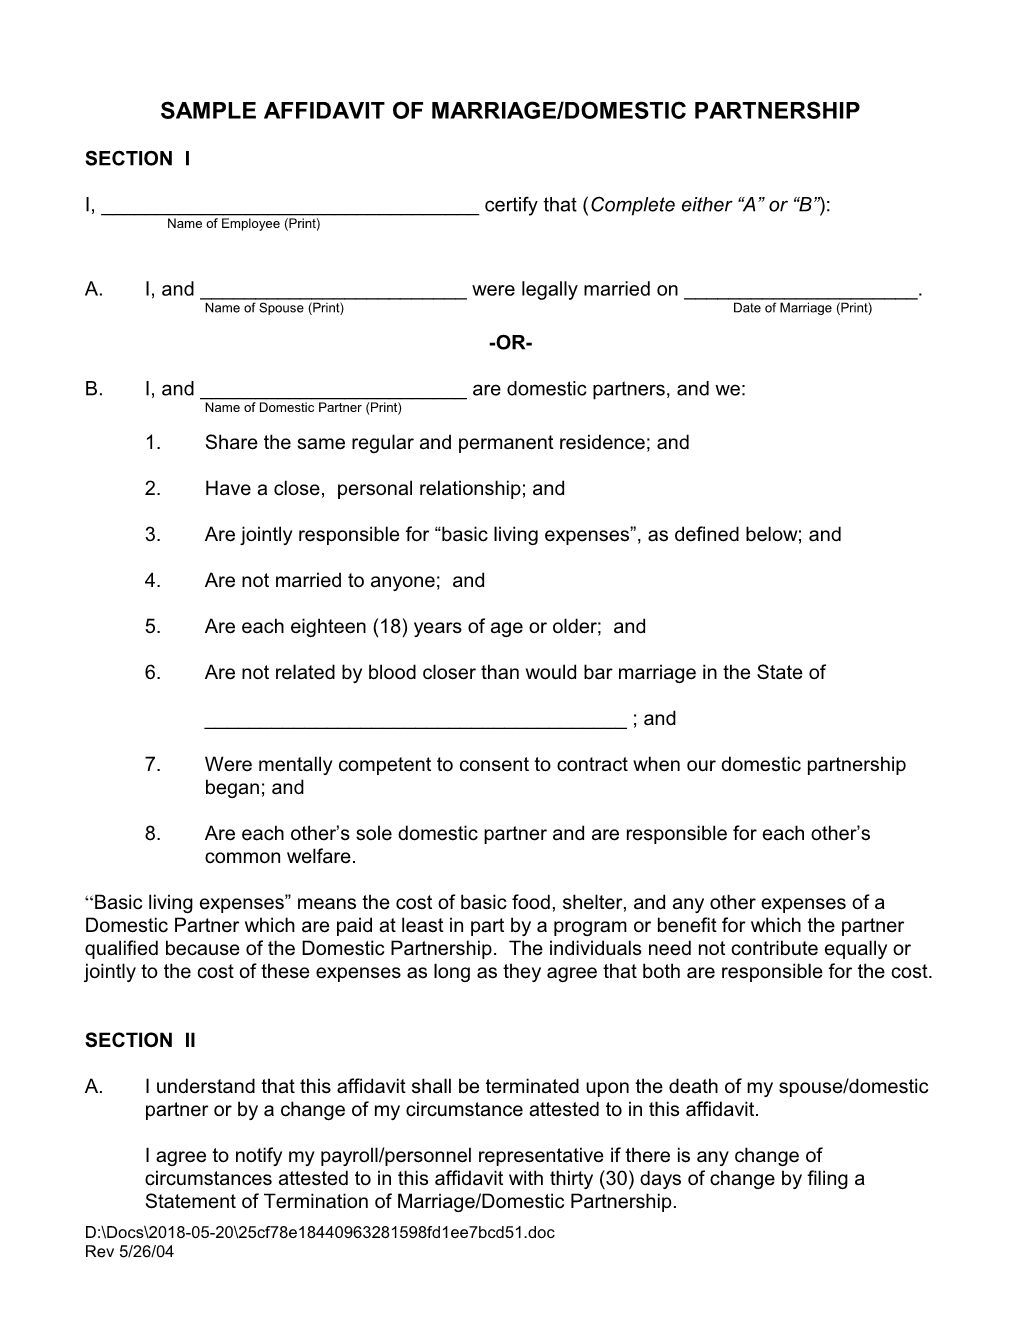 Sample Affidavit of Marriage/Domestic Partnership